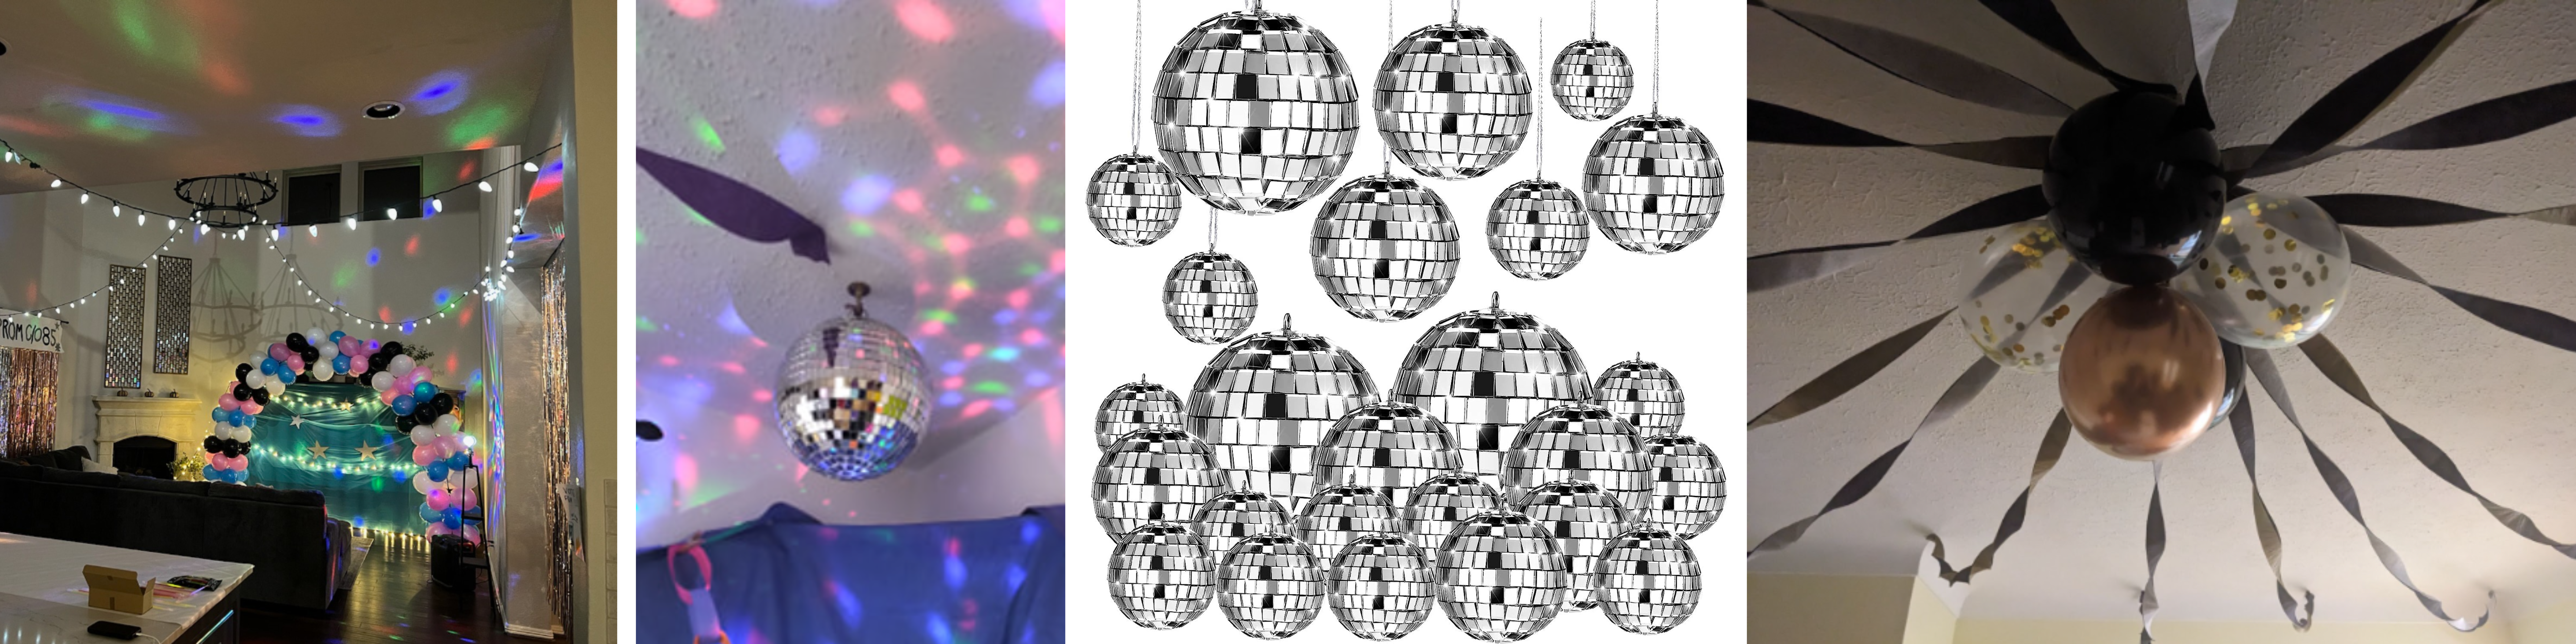 Pimp'n Homicide disco ball decoration